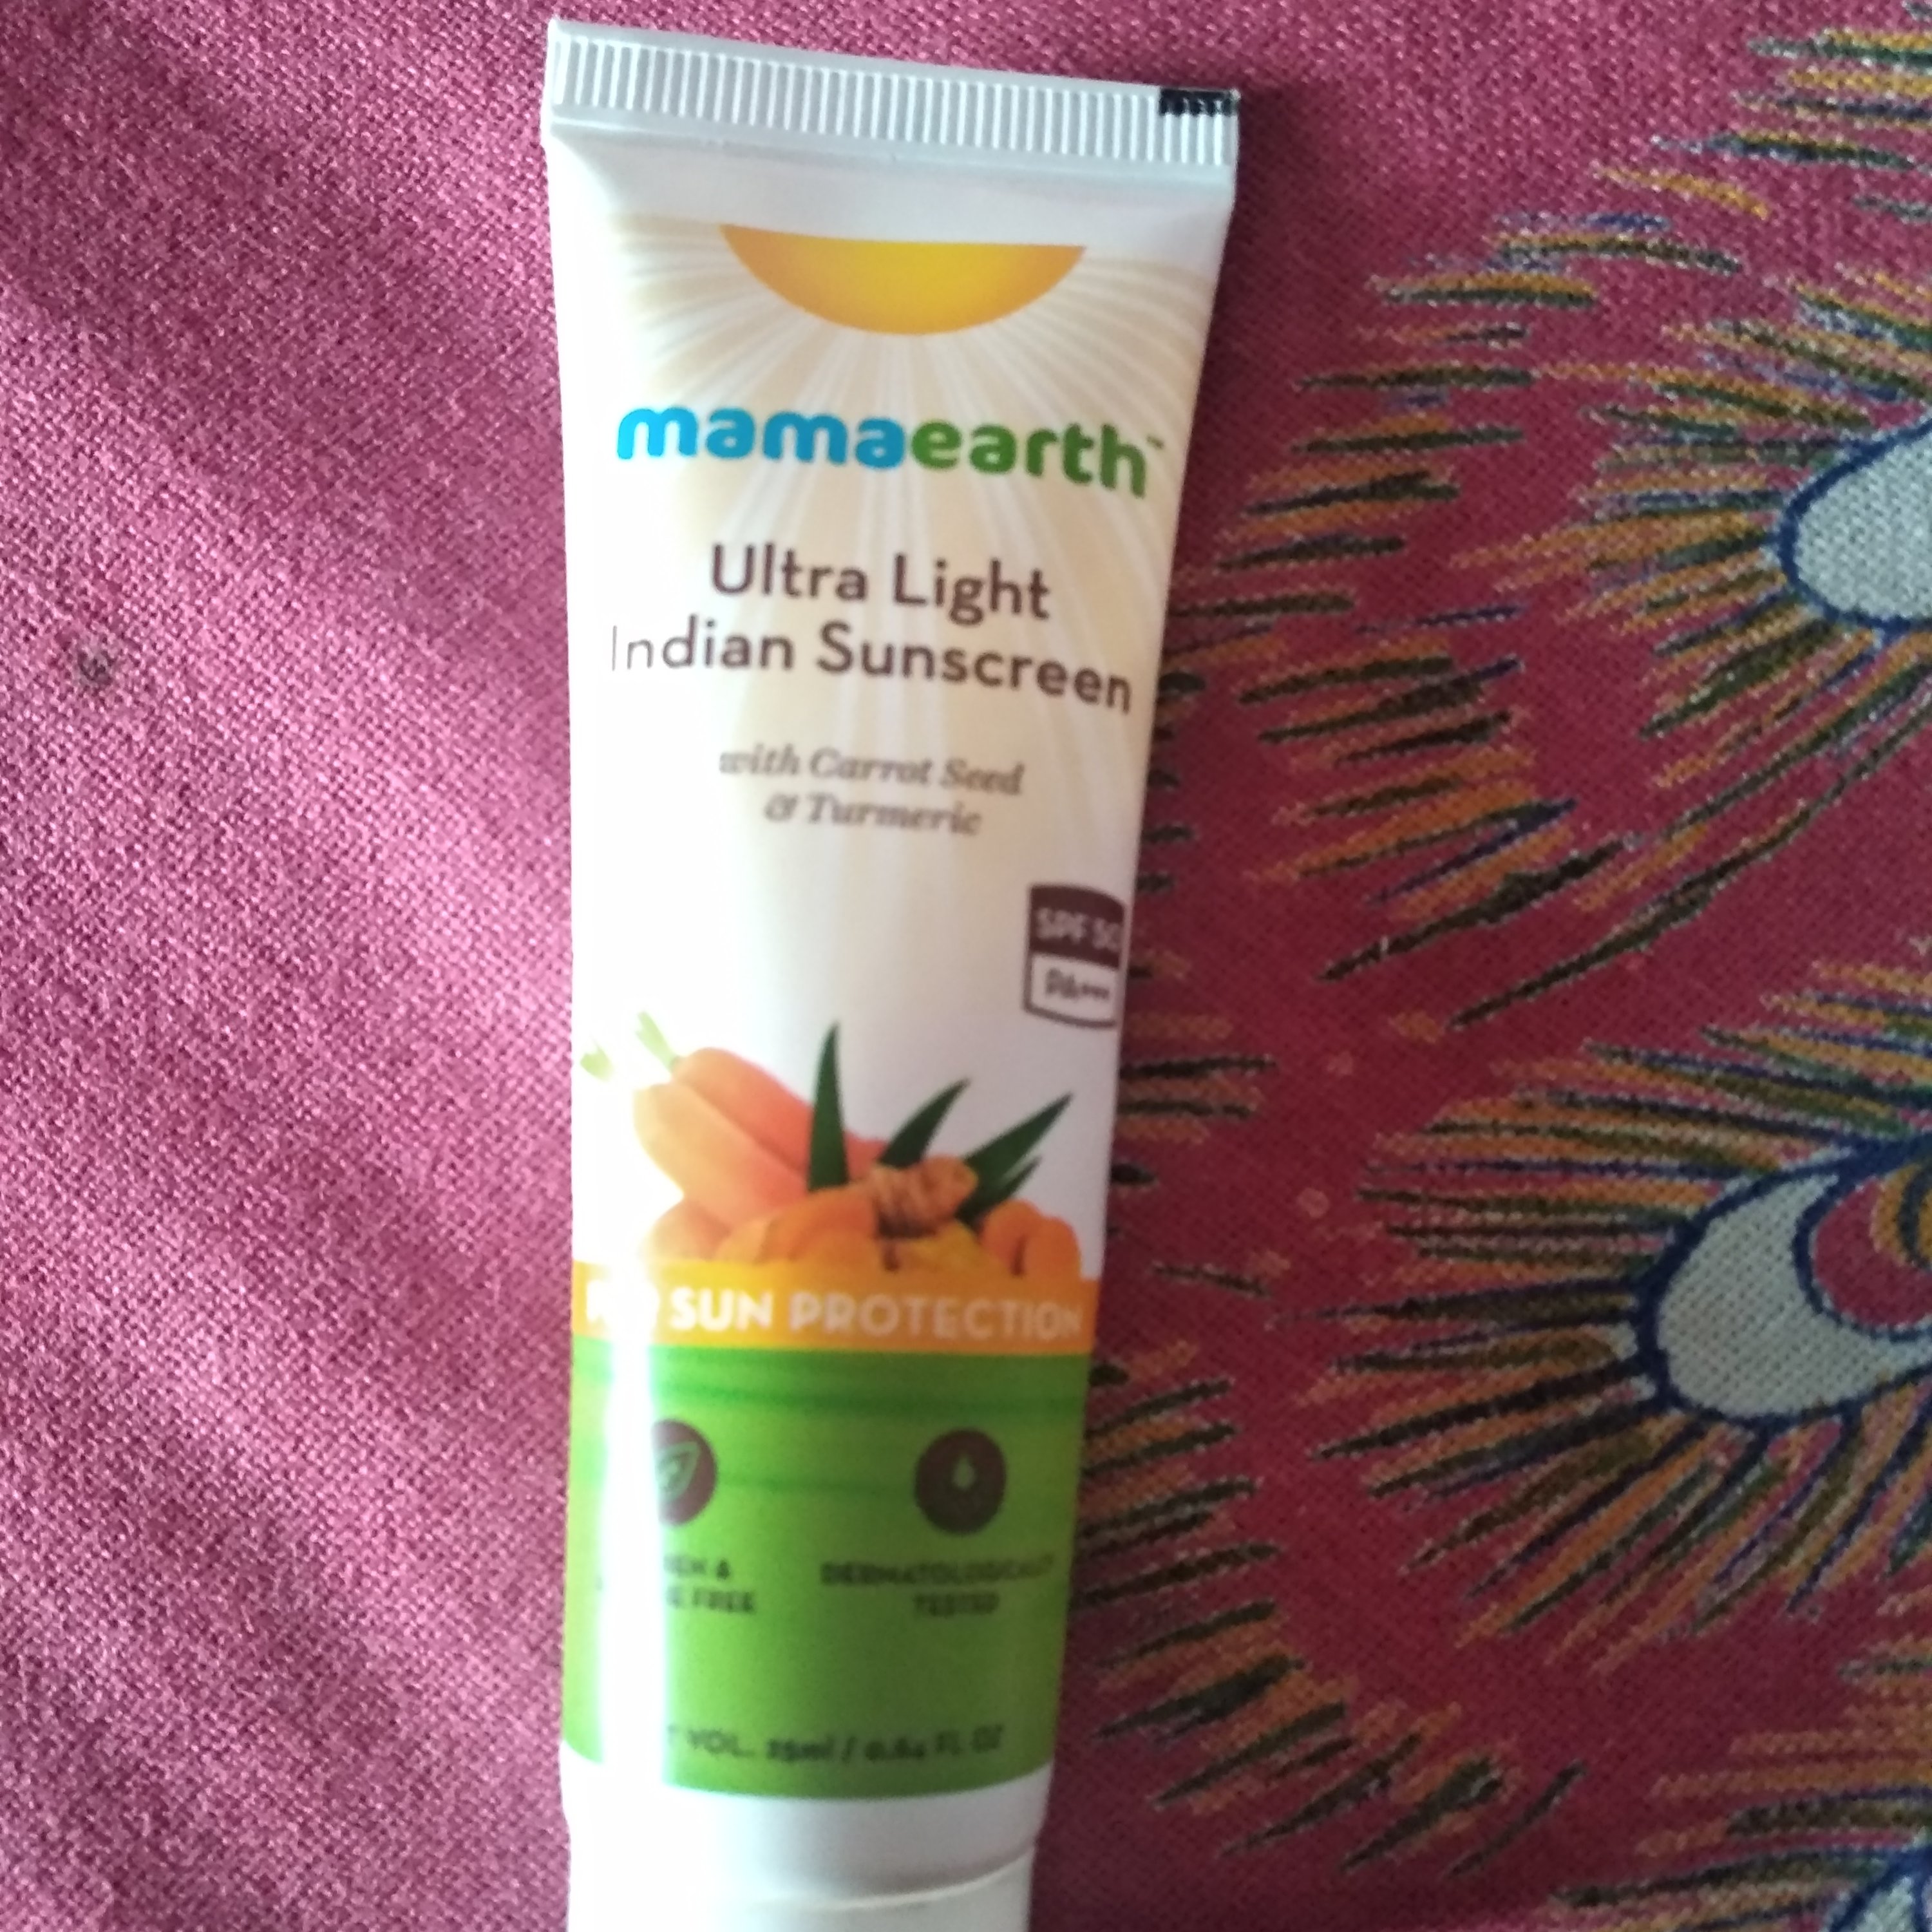 Mamaearth Ultra Light Indian Sunscreen Spf 50 Pa Reviews